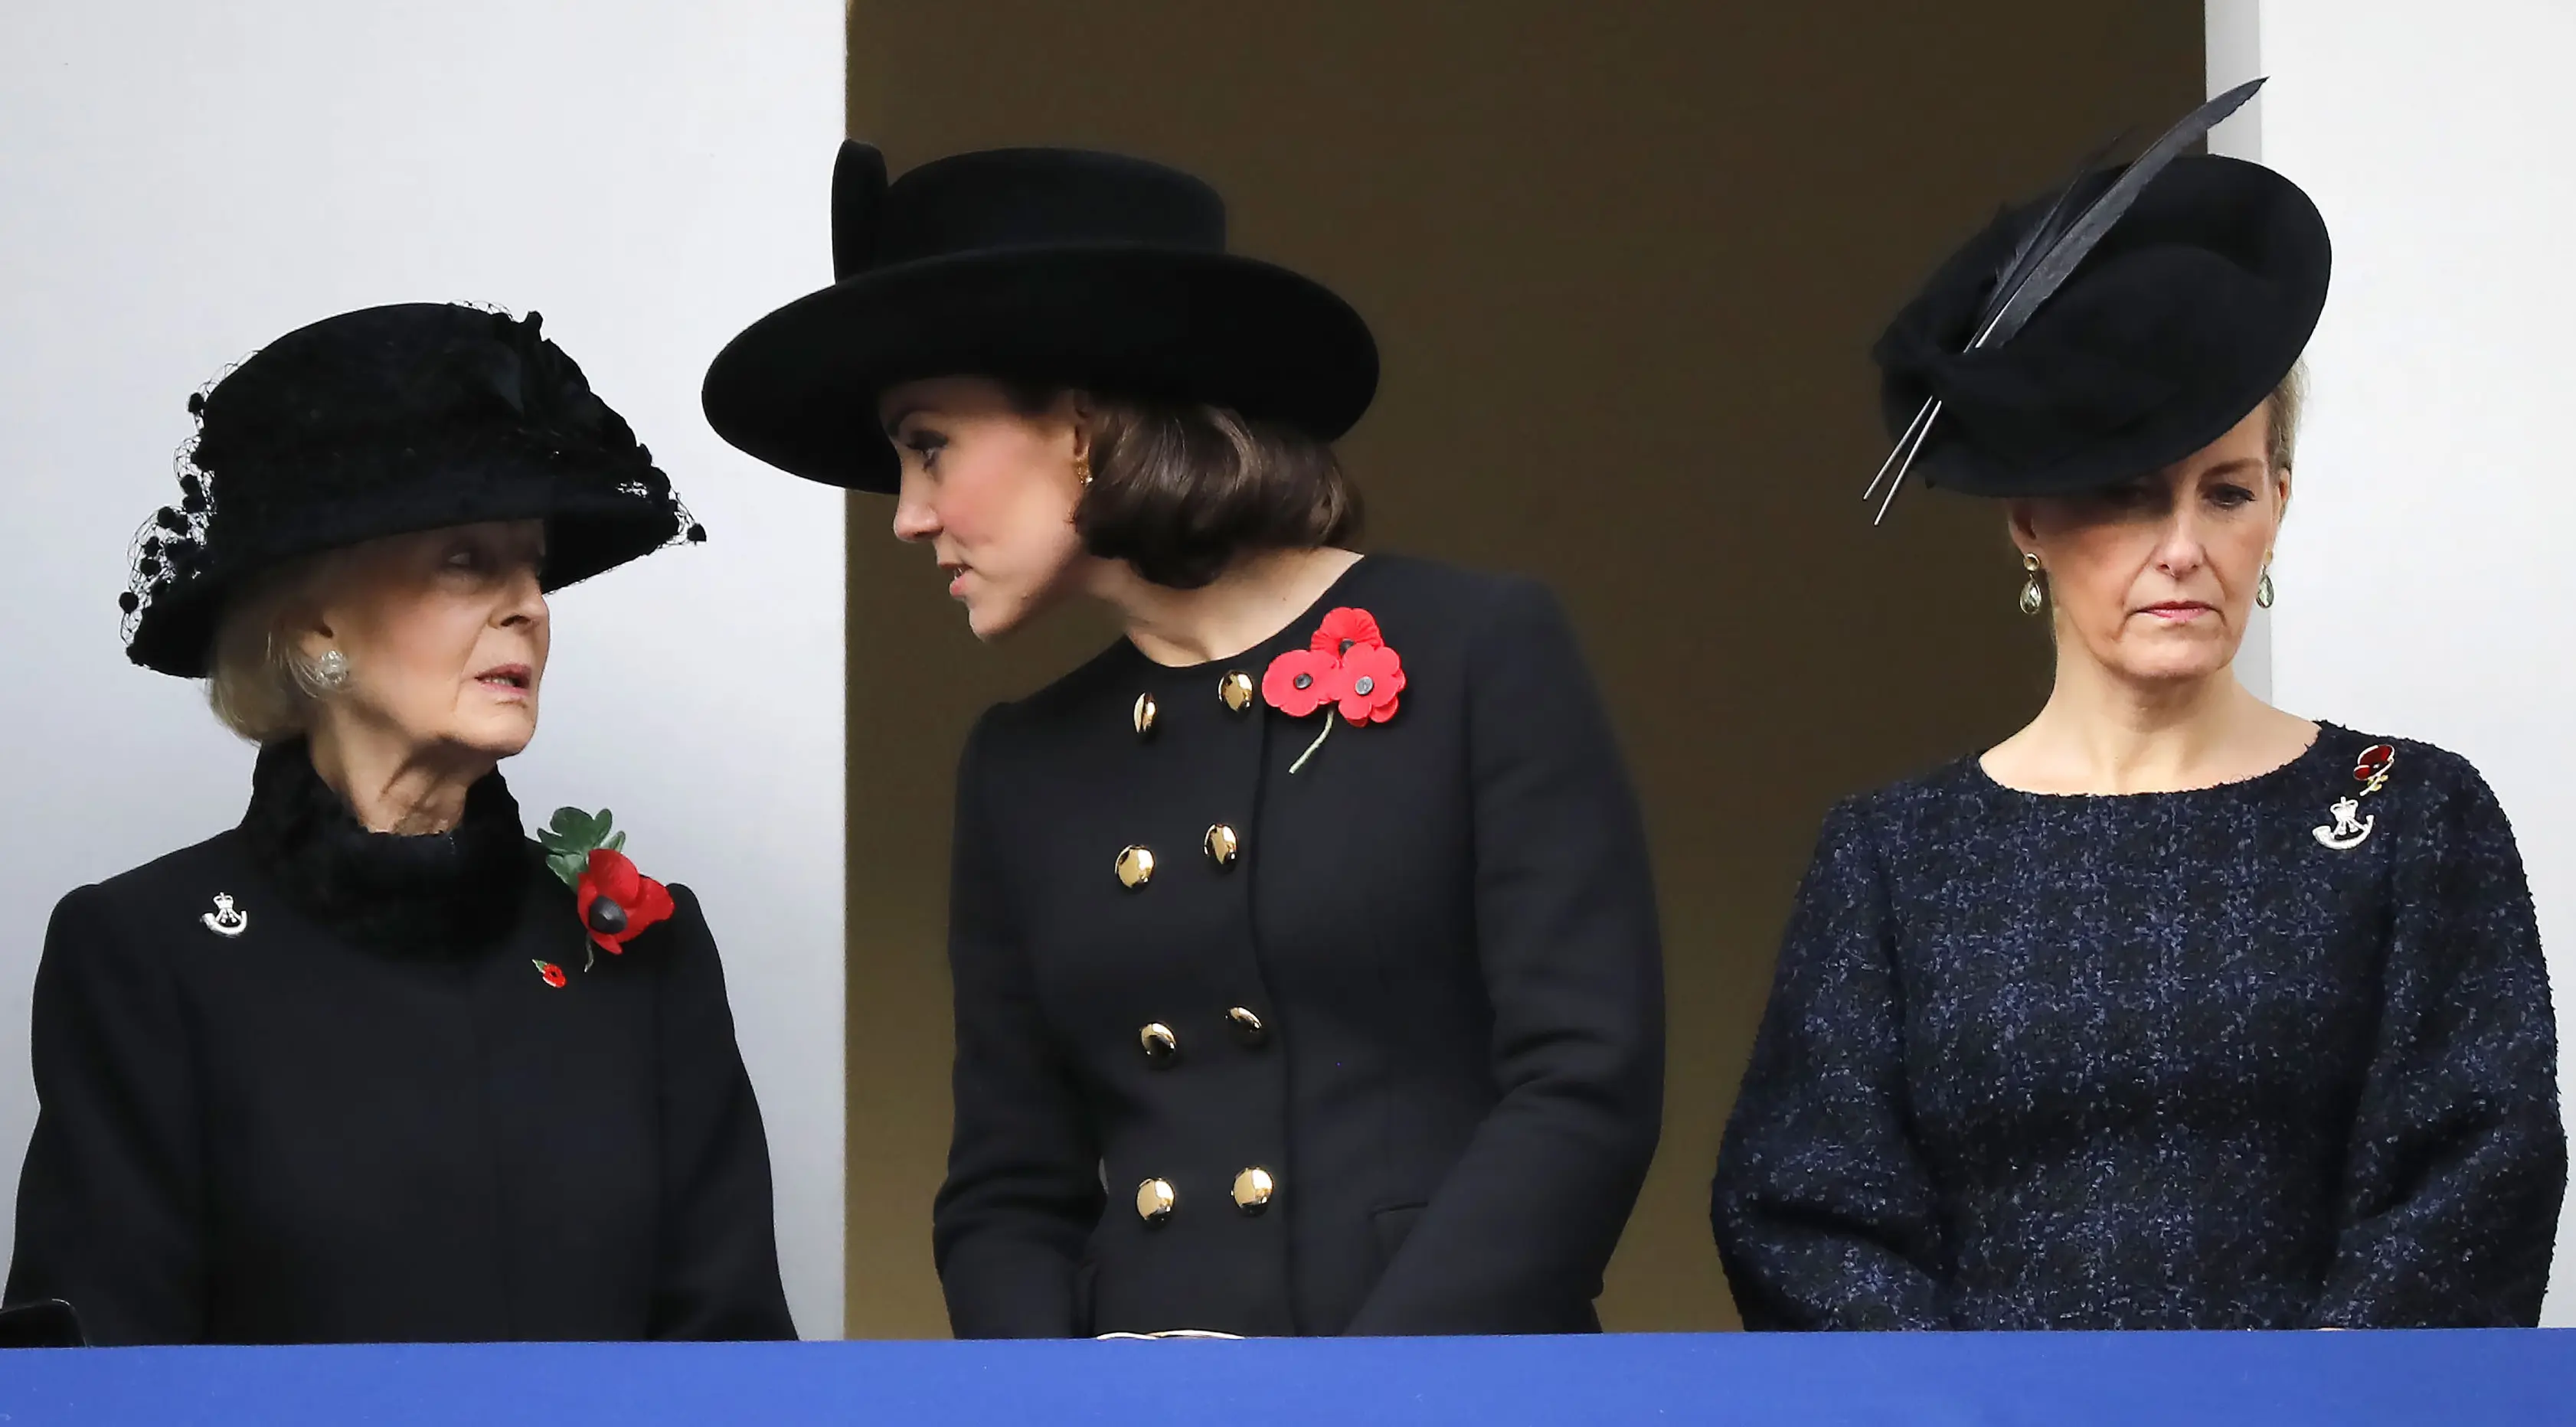 Kate Middleton berbincang dengan Putri Alexandra, Yang Terhormat Lady Ogilvy, pada upacara Remembrance Sunday Service di London, Minggu (12/11). Menyempurnakan gaya elegannya, sepasang anting mutiara ikut mempercantik penampilan Kate. (TOLGA AKMEN / AFP)